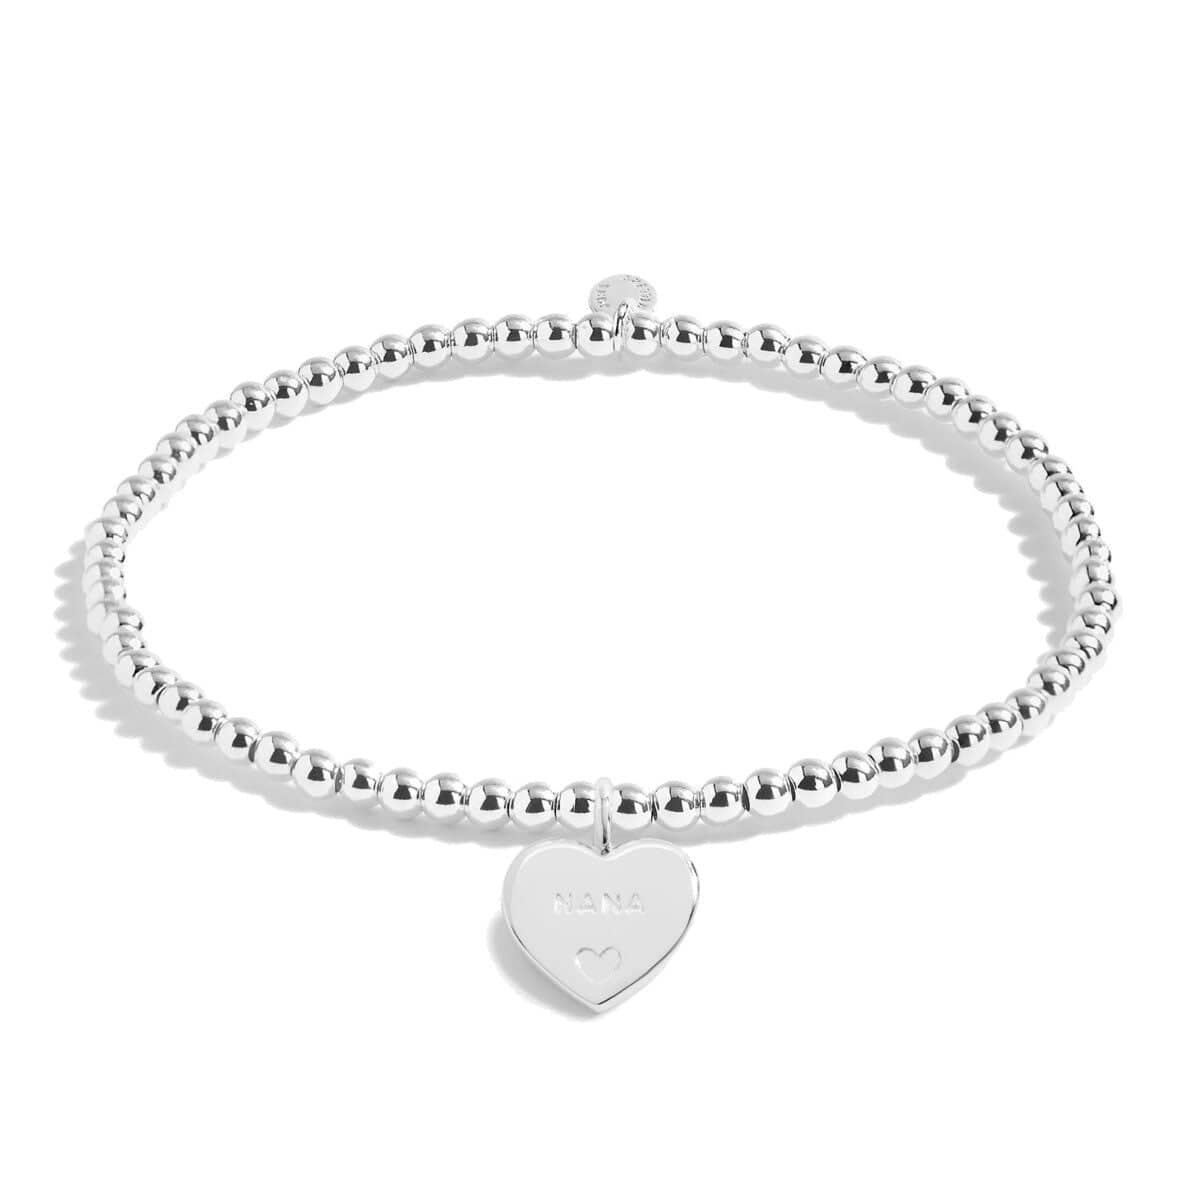 Joma Jewellery Bracelet Joma Jewellery Bracelet - A Little Wonderful Nana (Engraved Heart)